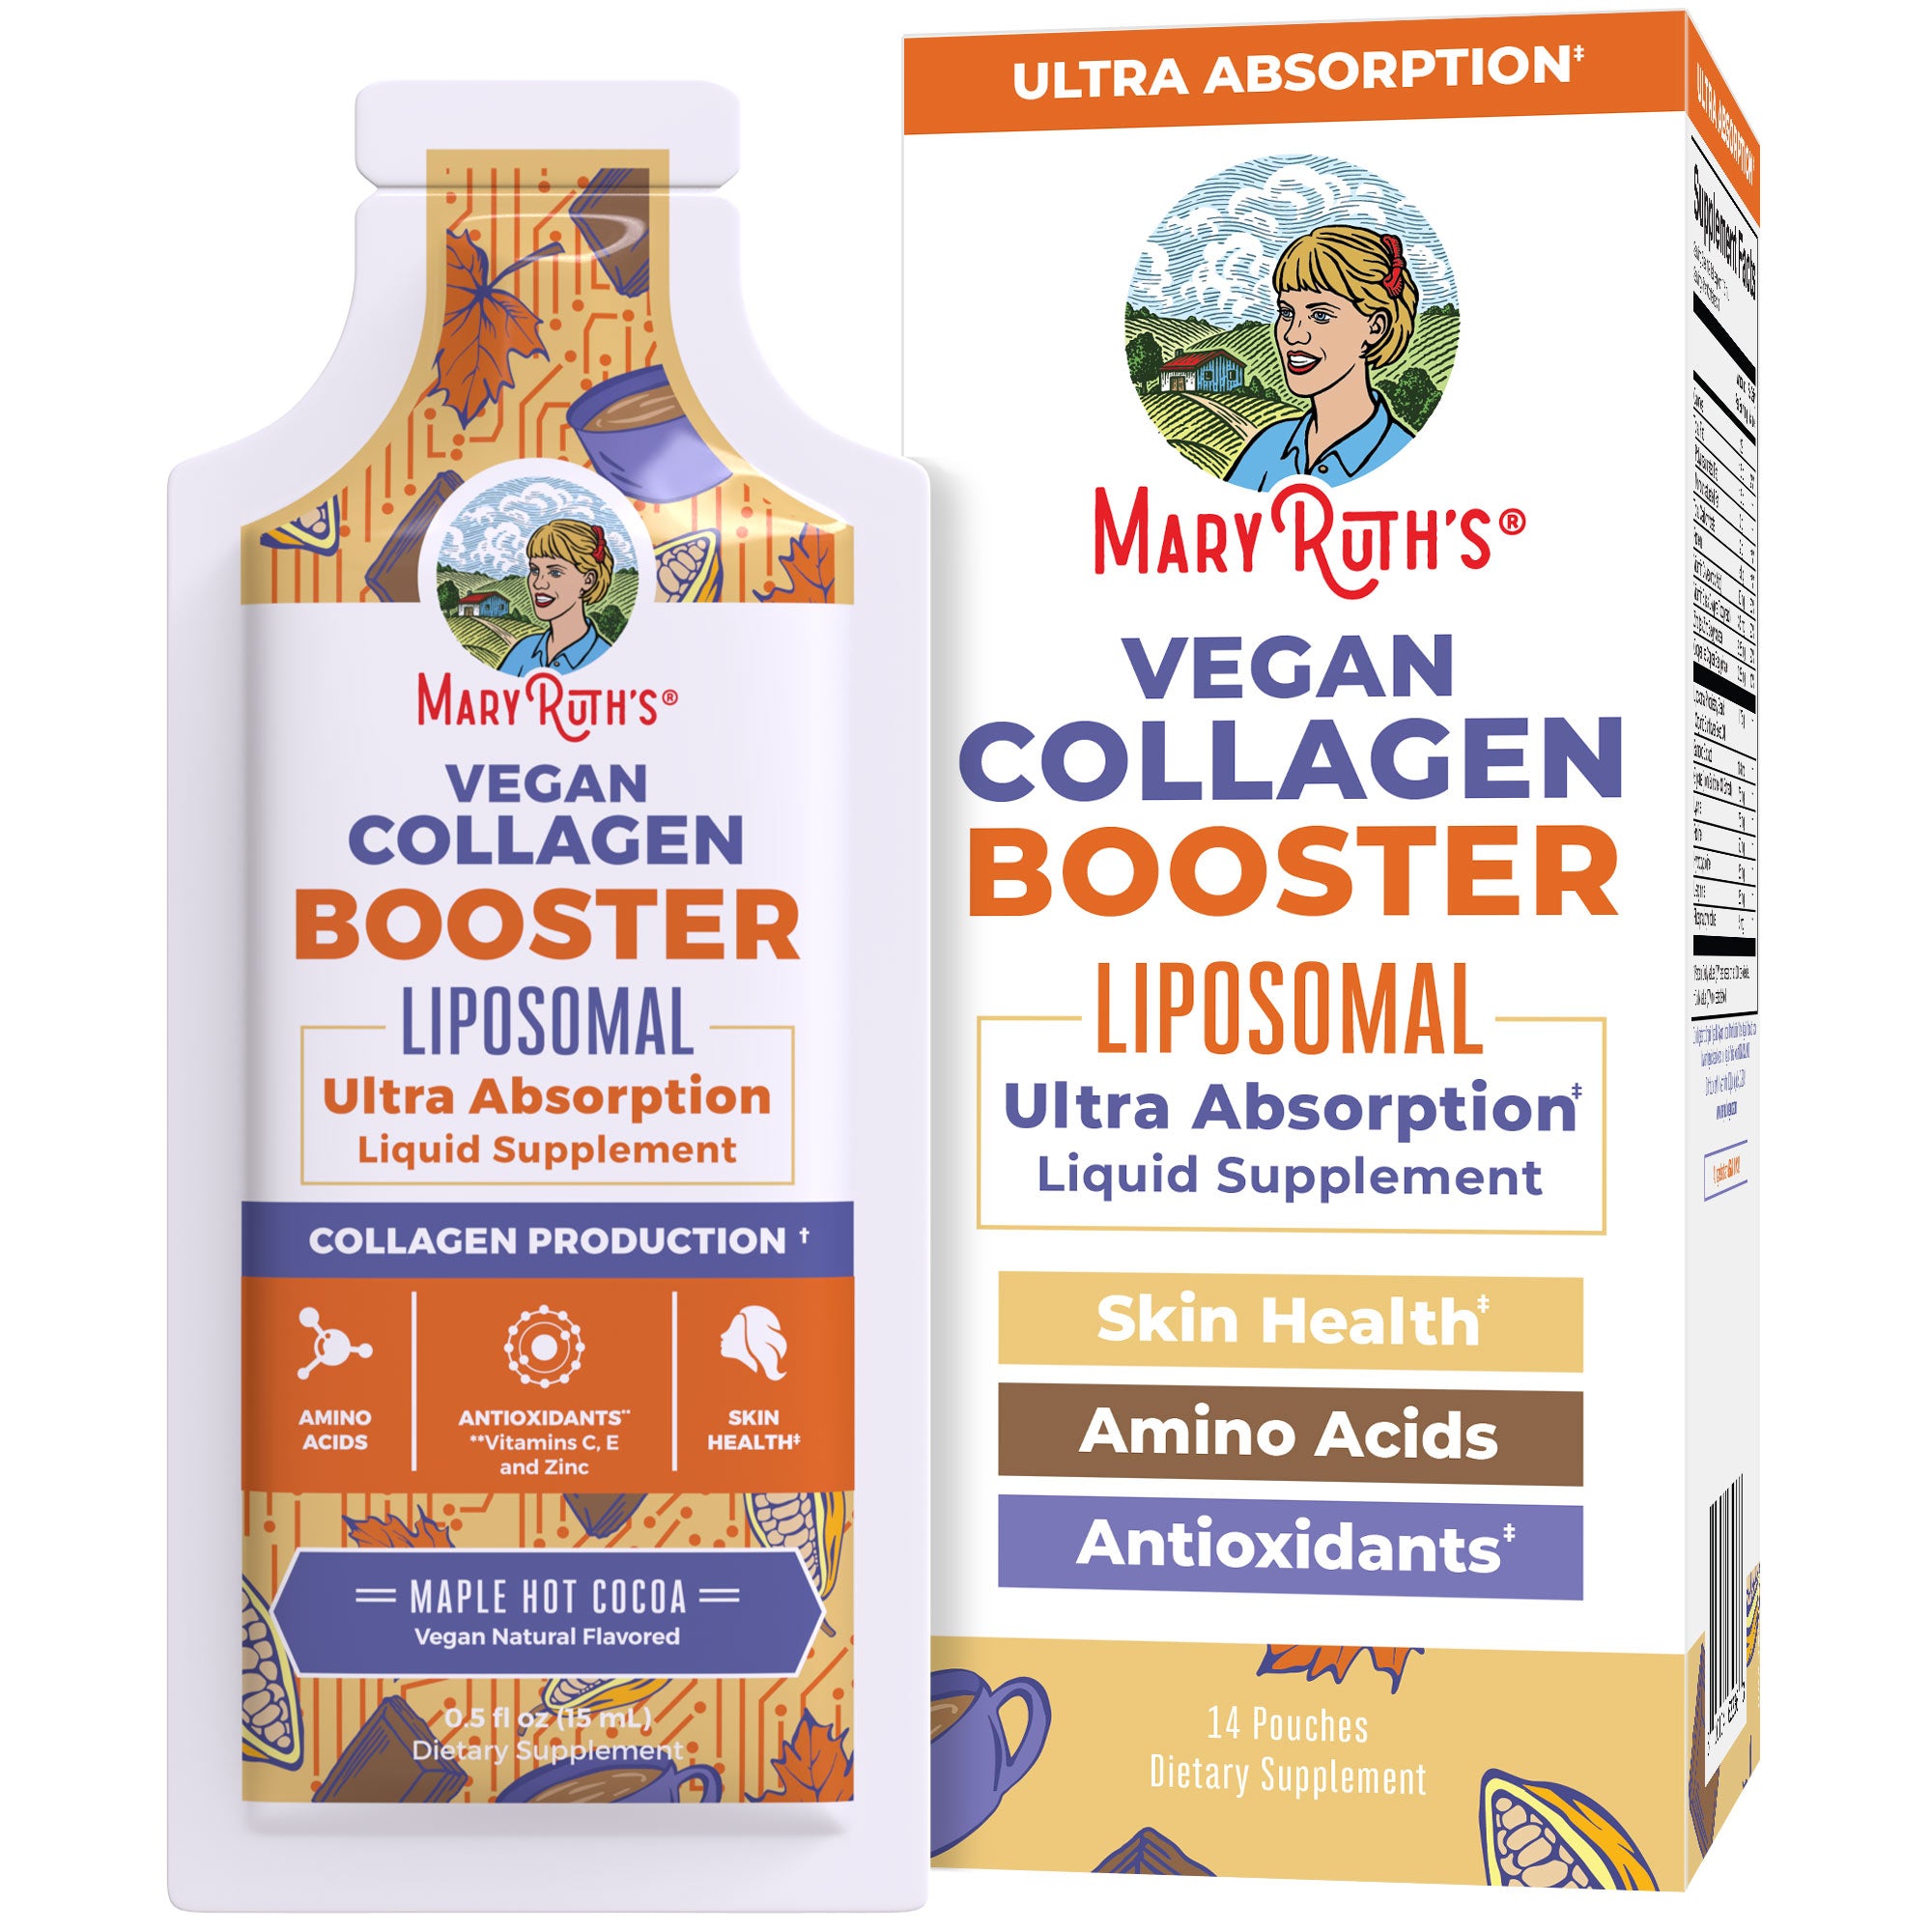 Vegan Collagen Booster Liposomal Pouches